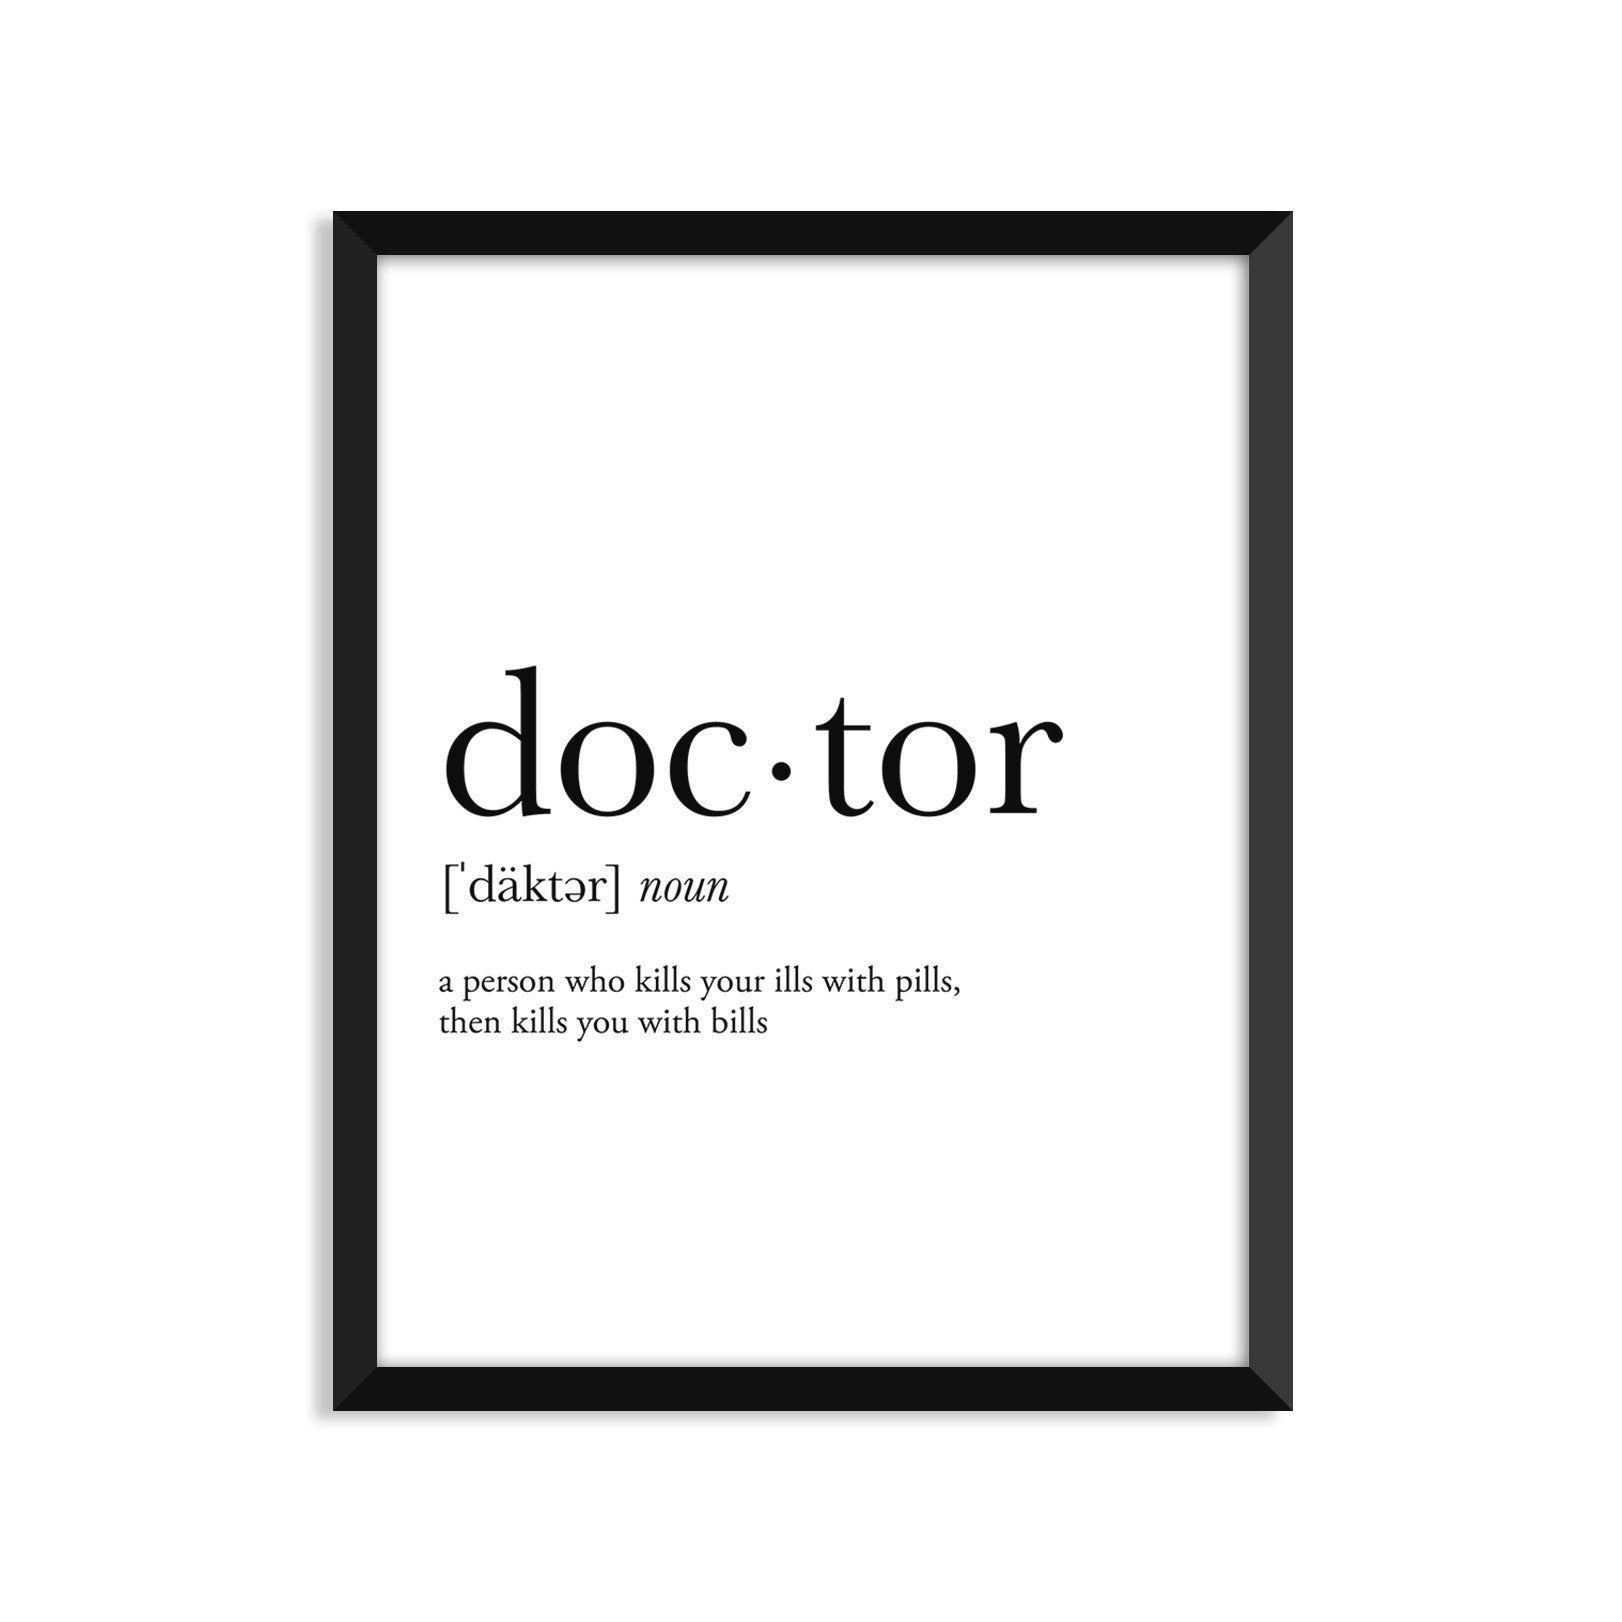 doctor noun greeting card